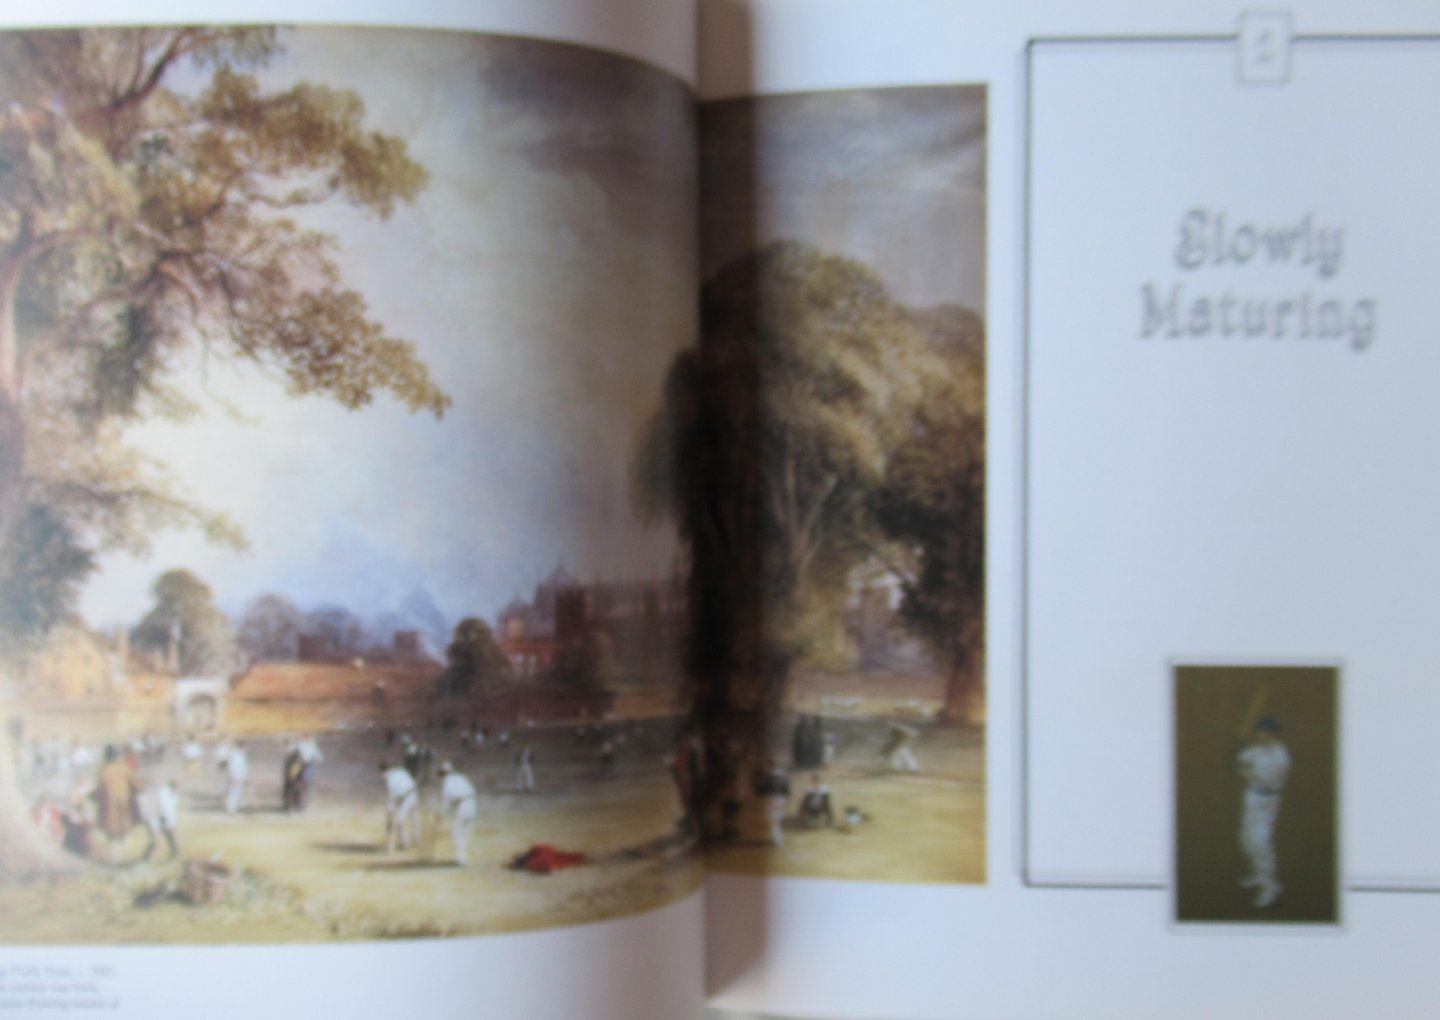 Rayvern Allen David - Cricket An illustrated history